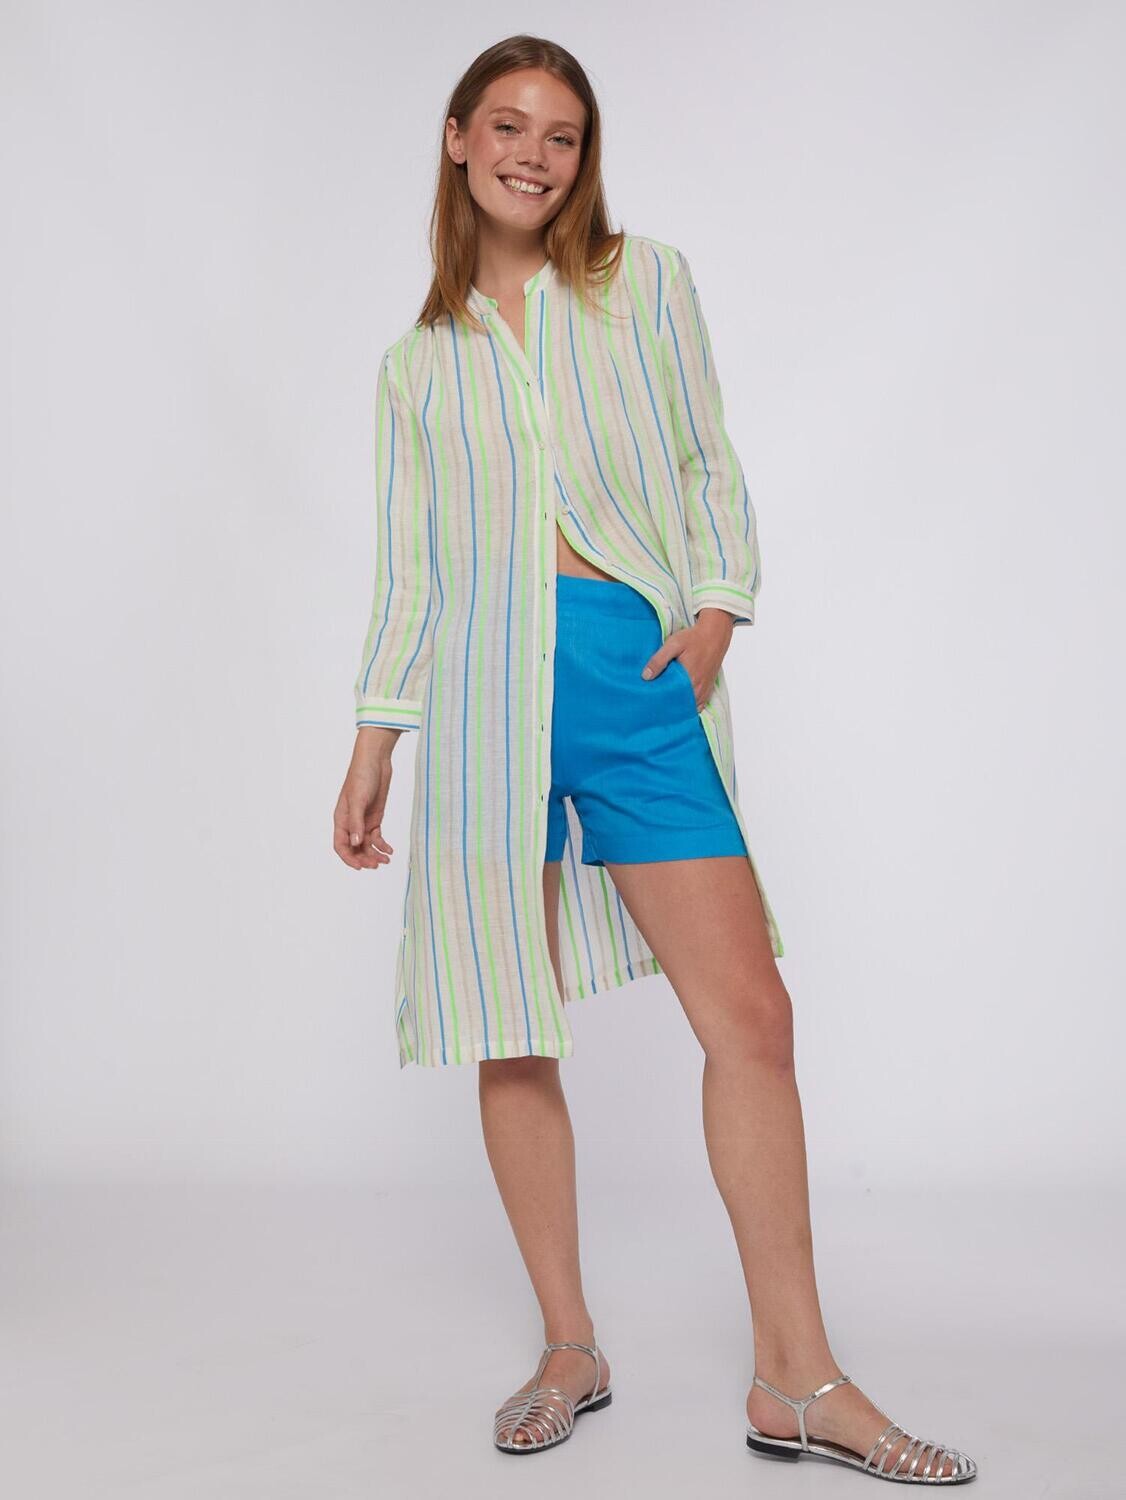 Rebecca Dress, Color: green stripes, Size: xs